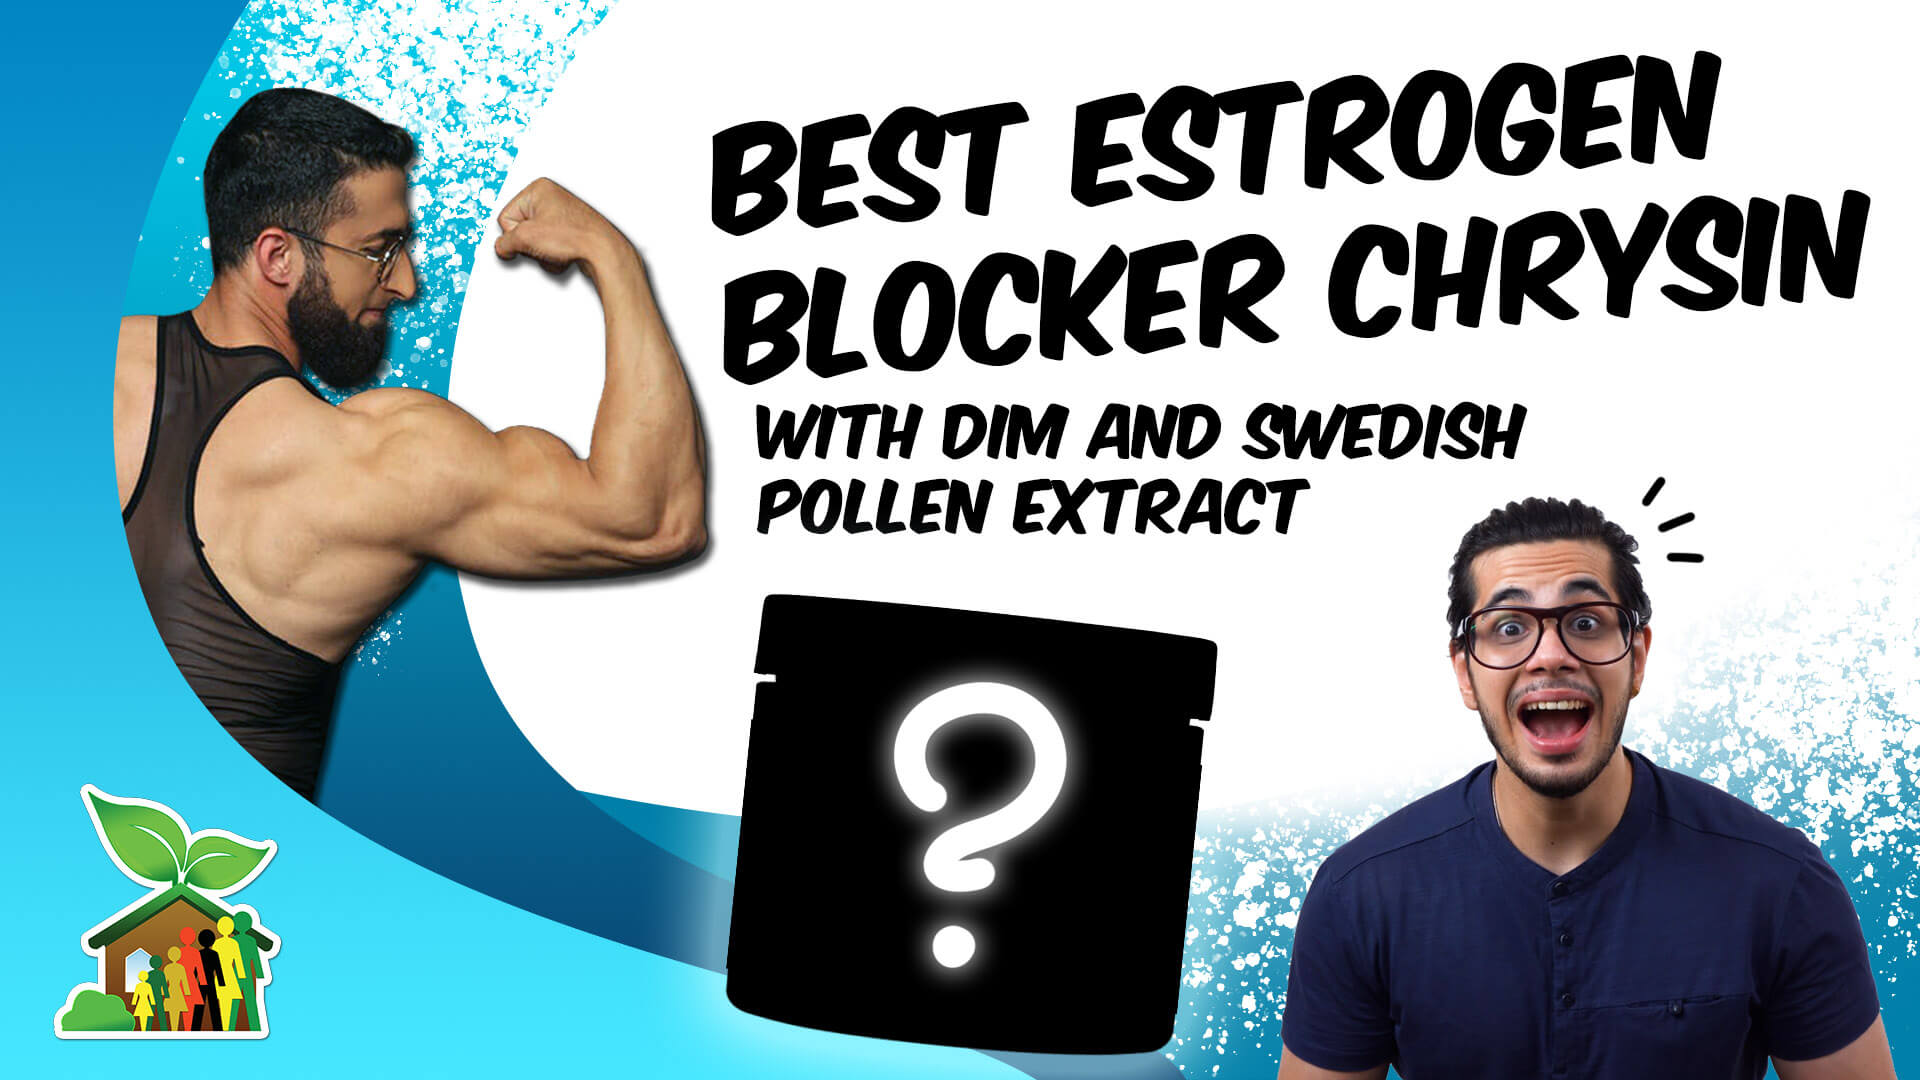 Best Estrogen Blocker Chrysin With Dim And Swedish Flower Pollen Extract